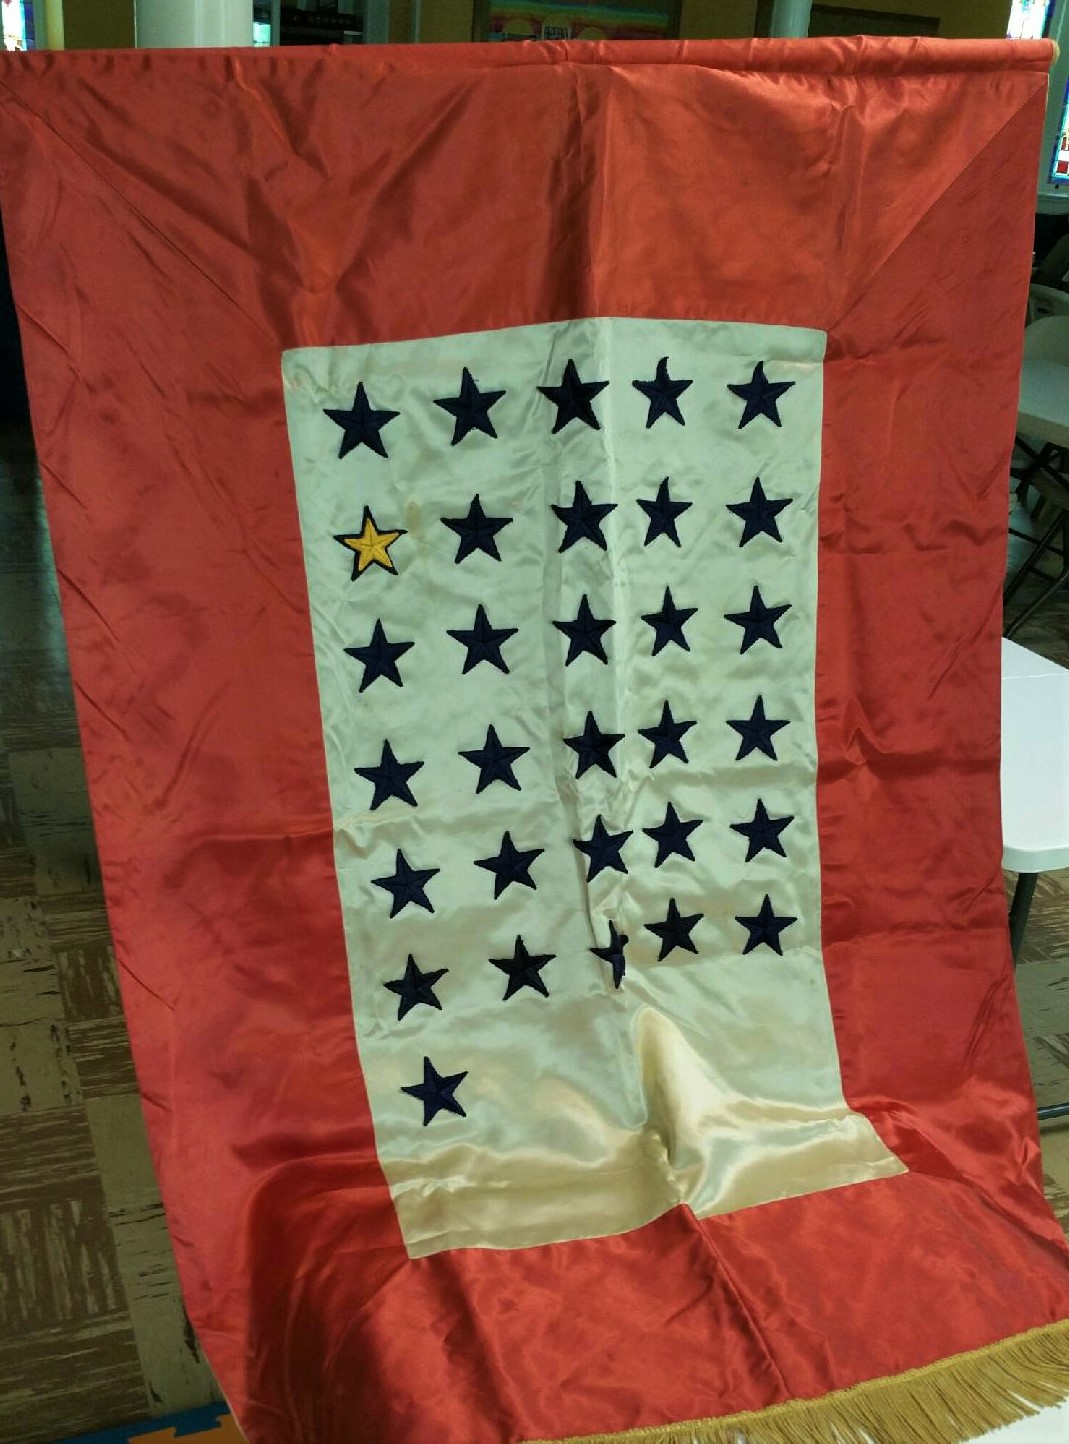 Thumbnail for the post titled: New Jerusalem’s Gold Star Flag